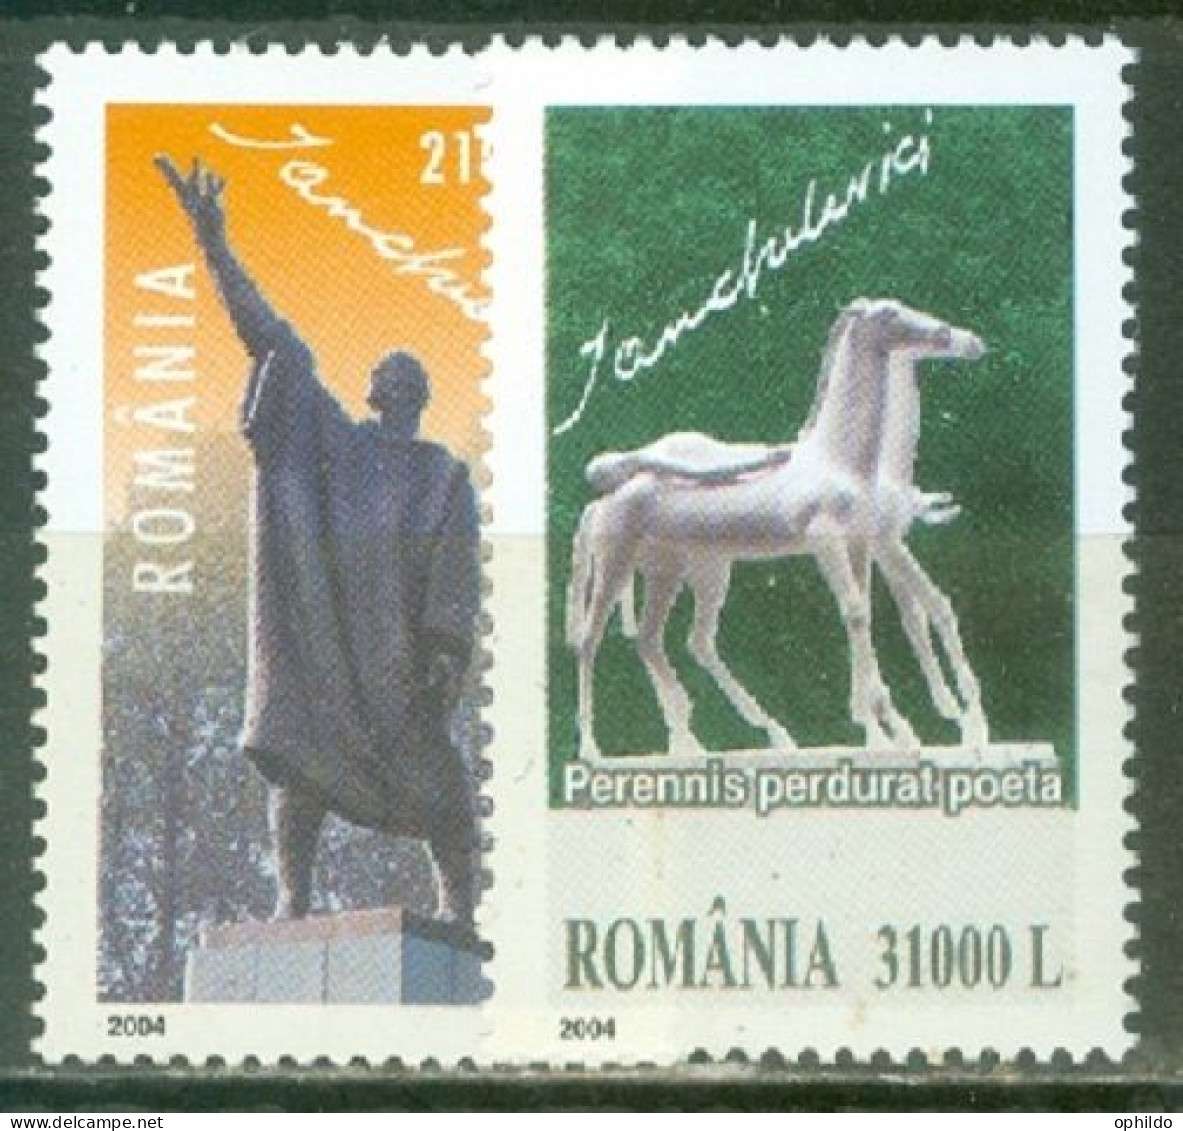 Roumanie  Michel  5863/5864 * *  TB   Cheval   - Unused Stamps